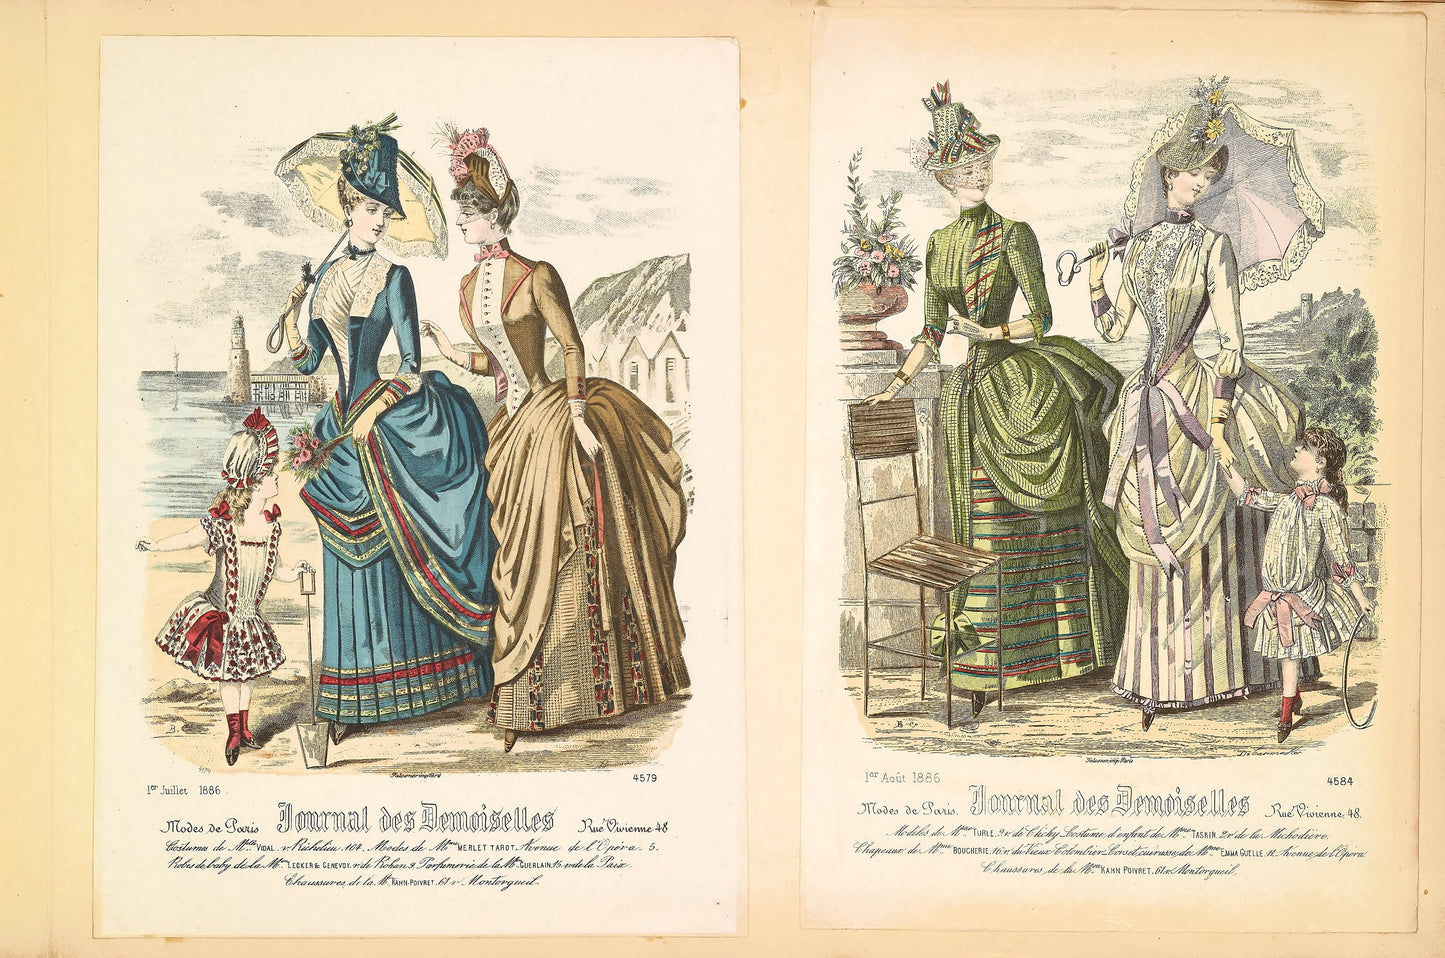 18th & 19th Century Fashion Plates Set 1 [37 Images]